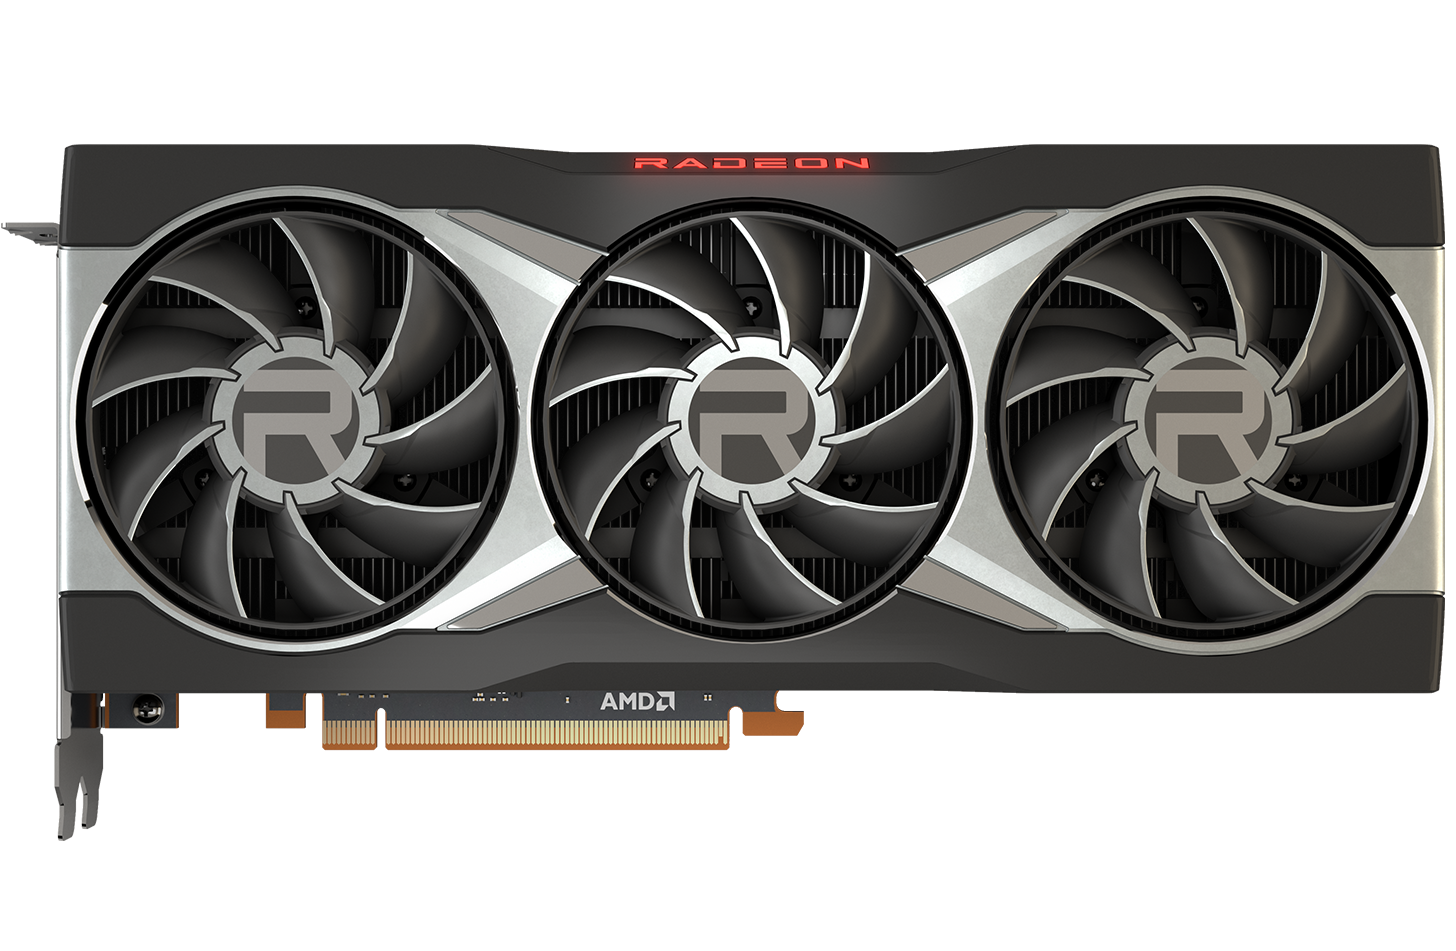 GIGABYTE confirms custom AORUS Radeon RX 6800 XT series